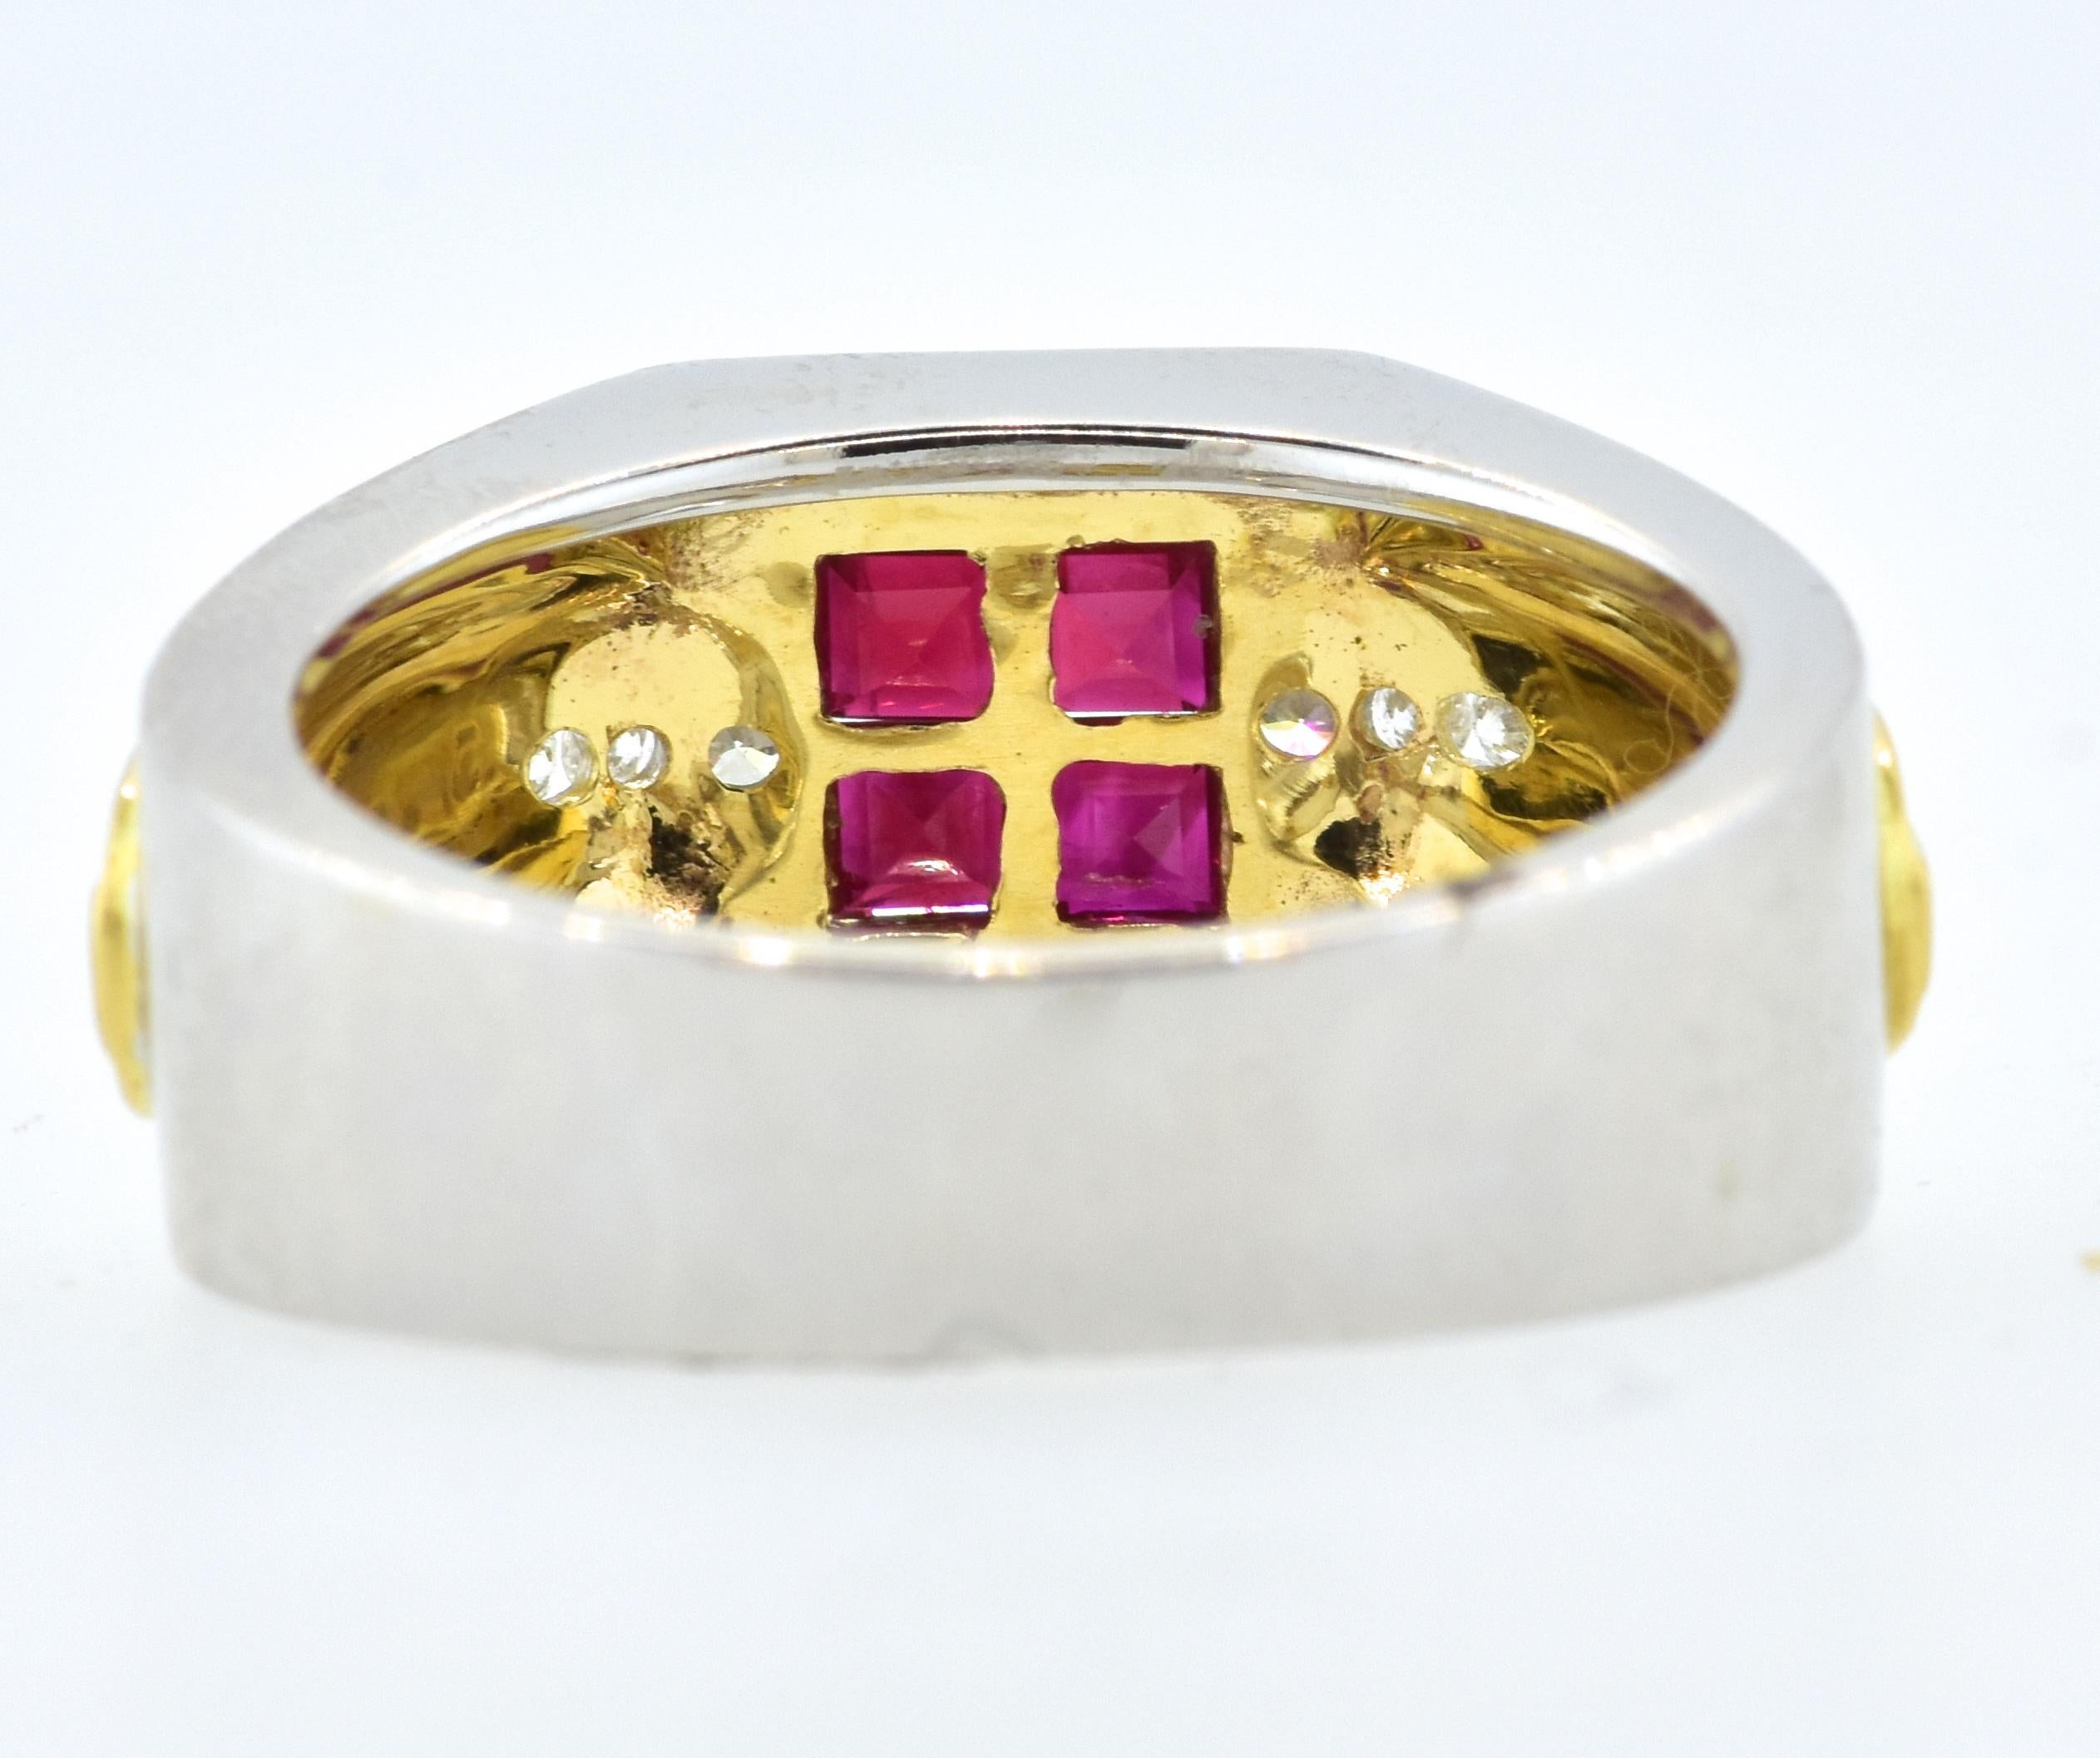 Brilliant Cut Ruby, Diamond and Gold Vintage Ring, circa 1960